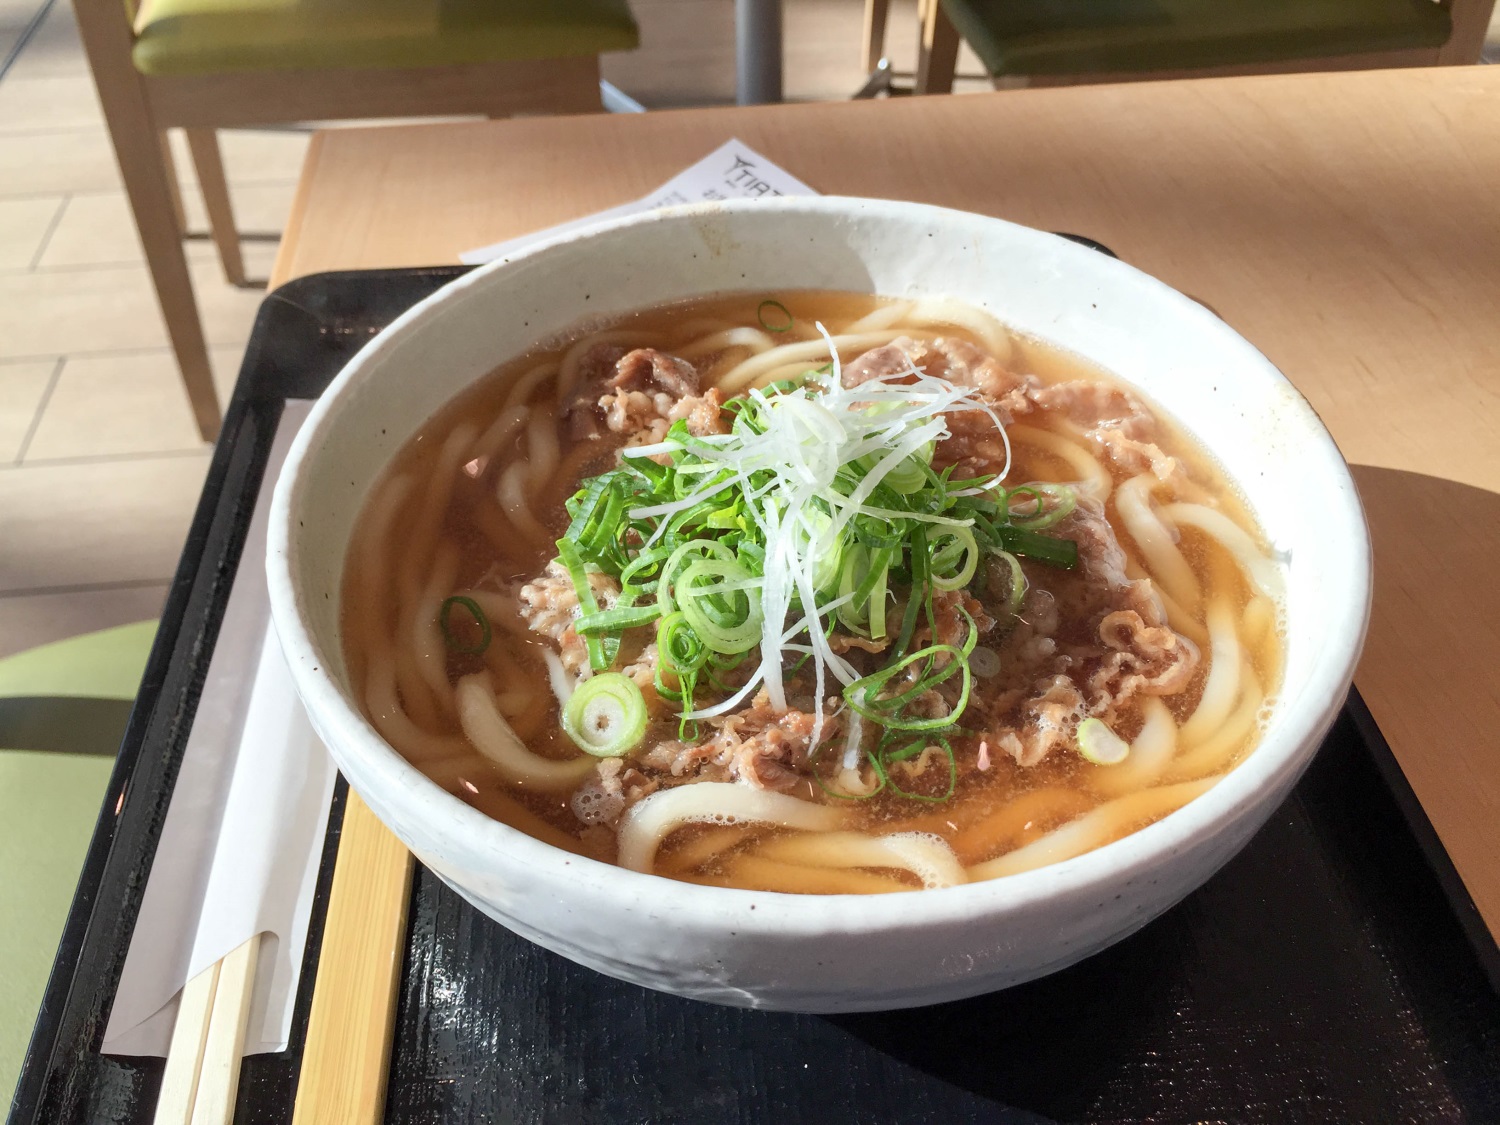 Bowl of udon noodles